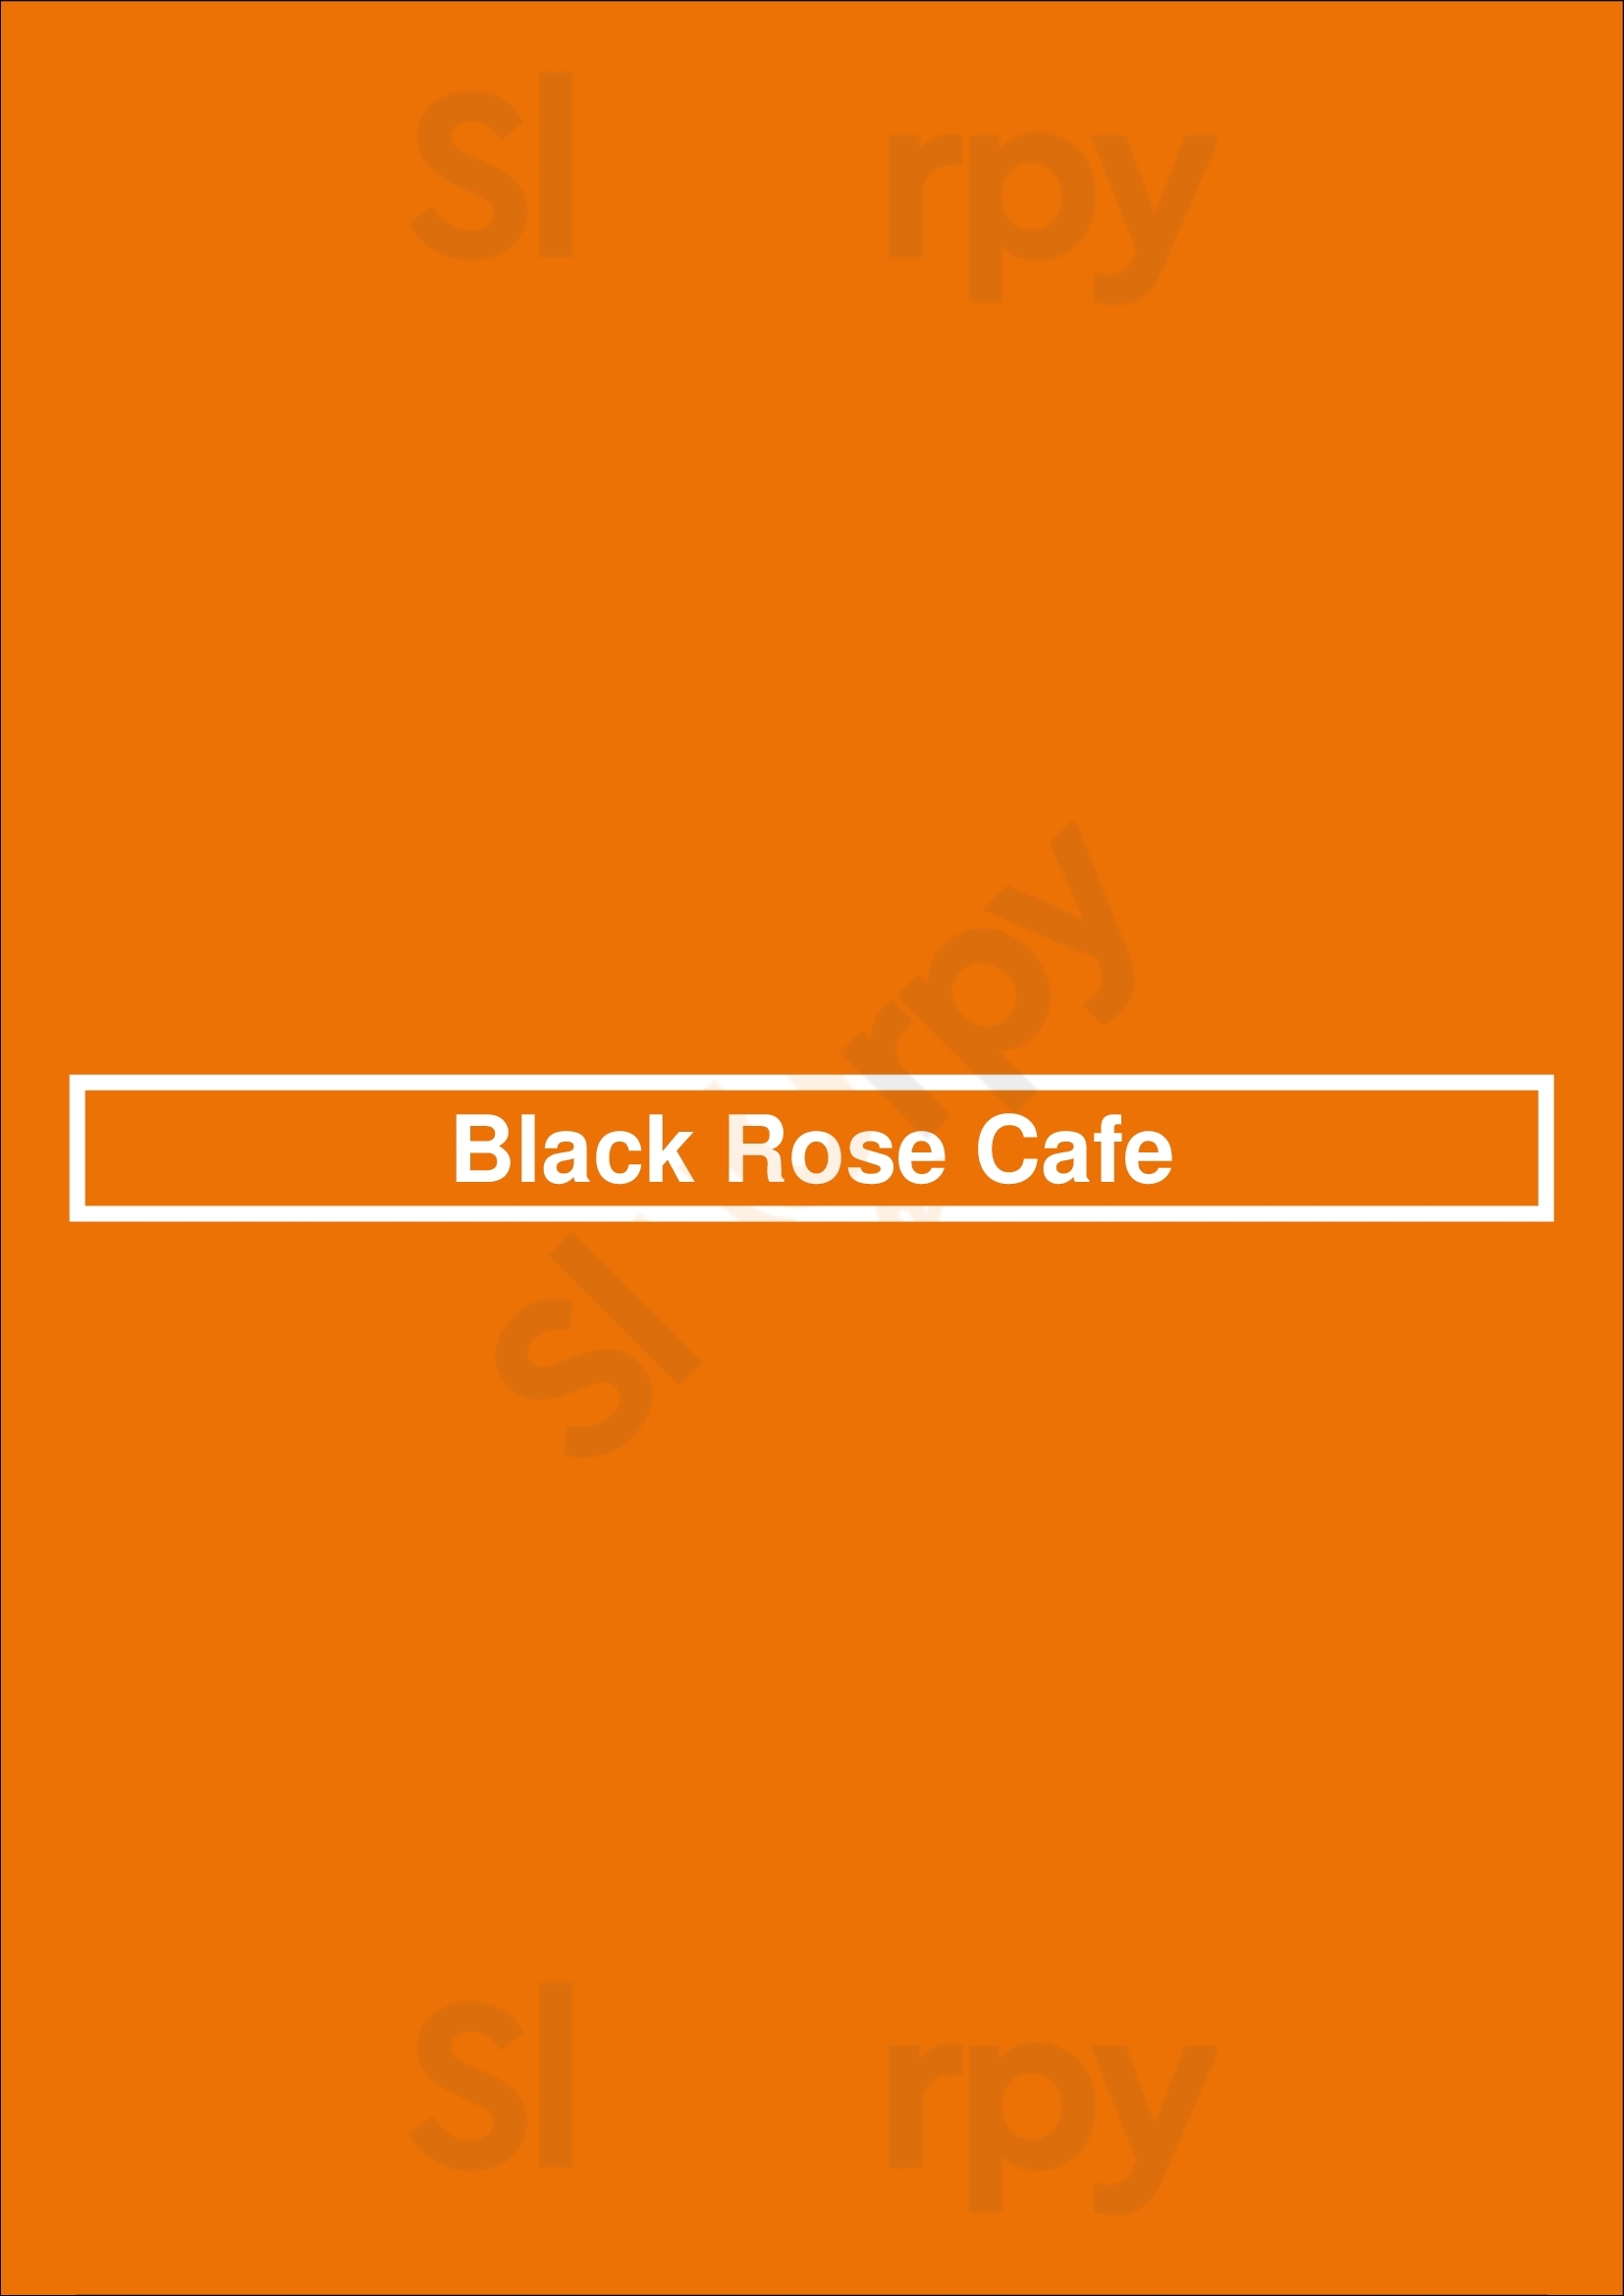 Black Rose Cafe Liverpool Menu - 1